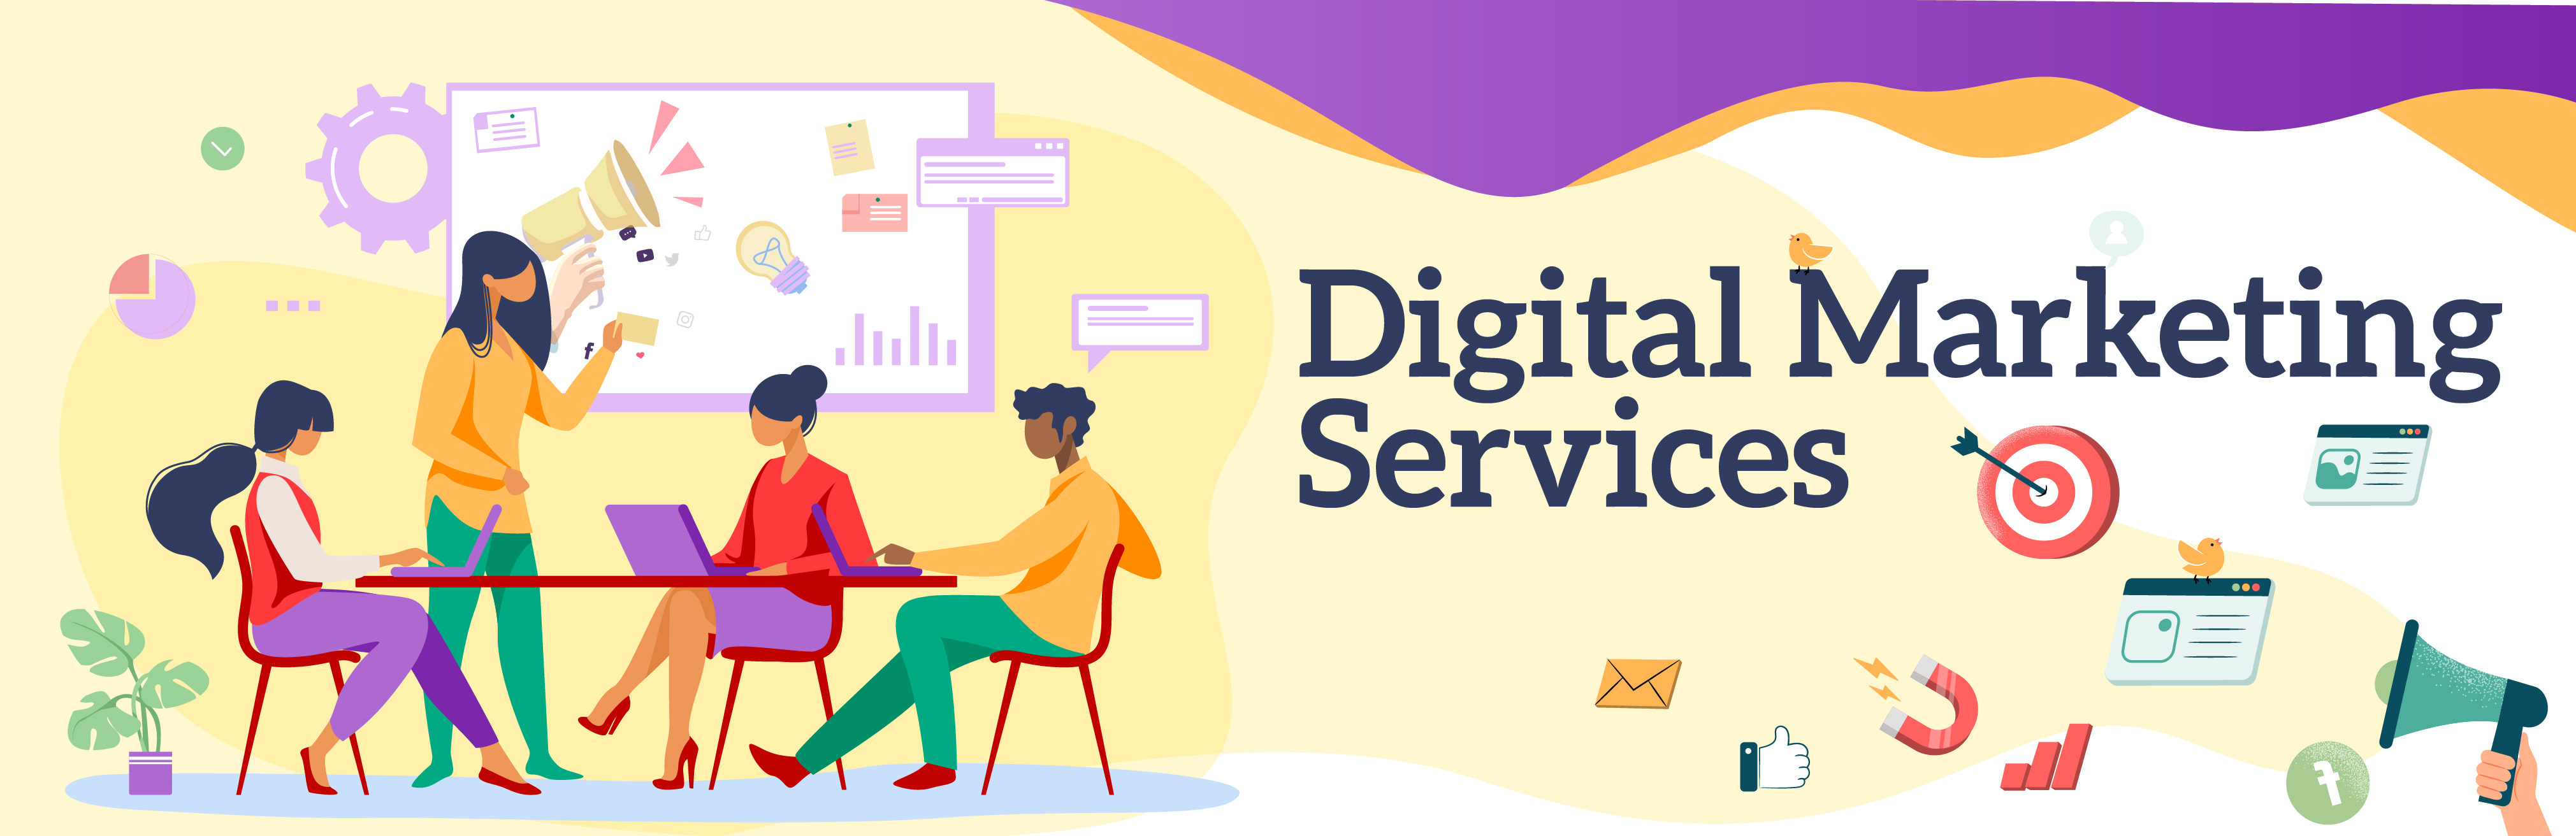 digitalmarketing_service